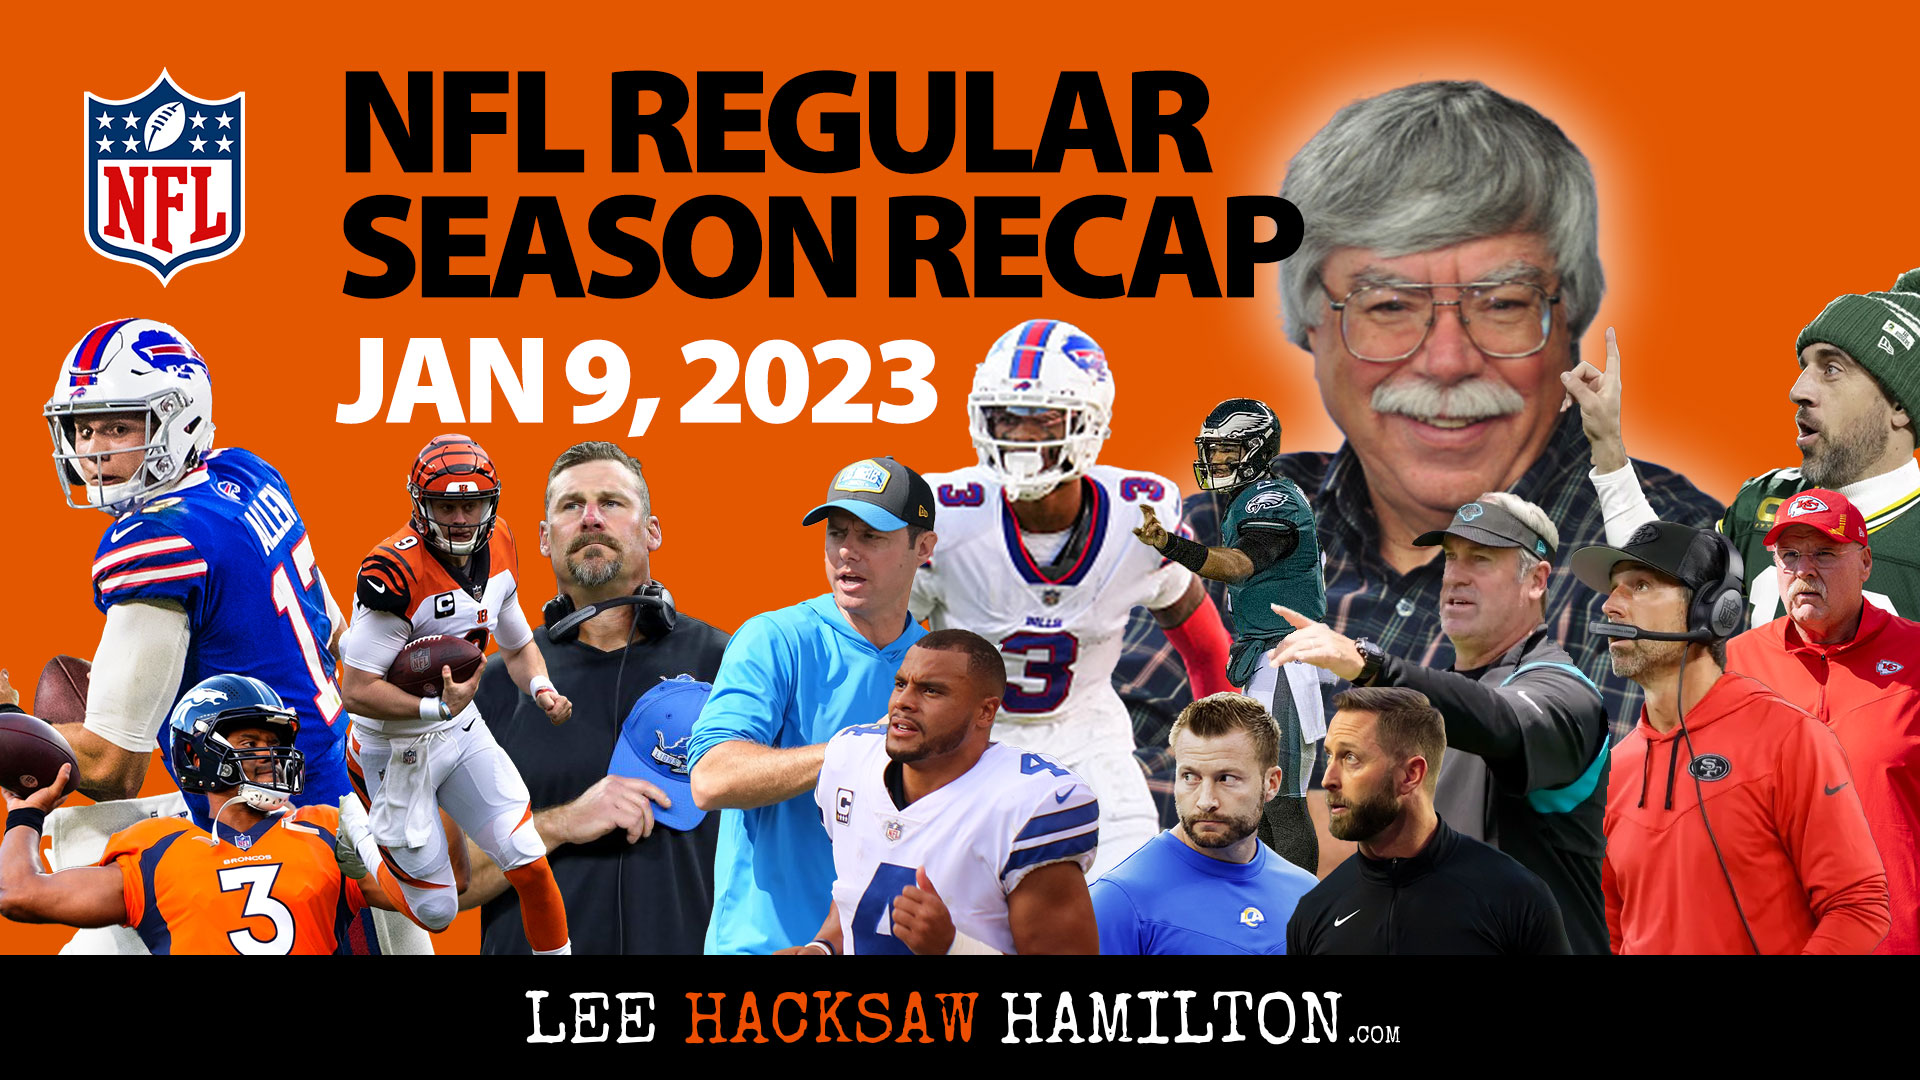 NFL Regular Season Recap, Playoff Preview, Lee Hacksaw Hamilton